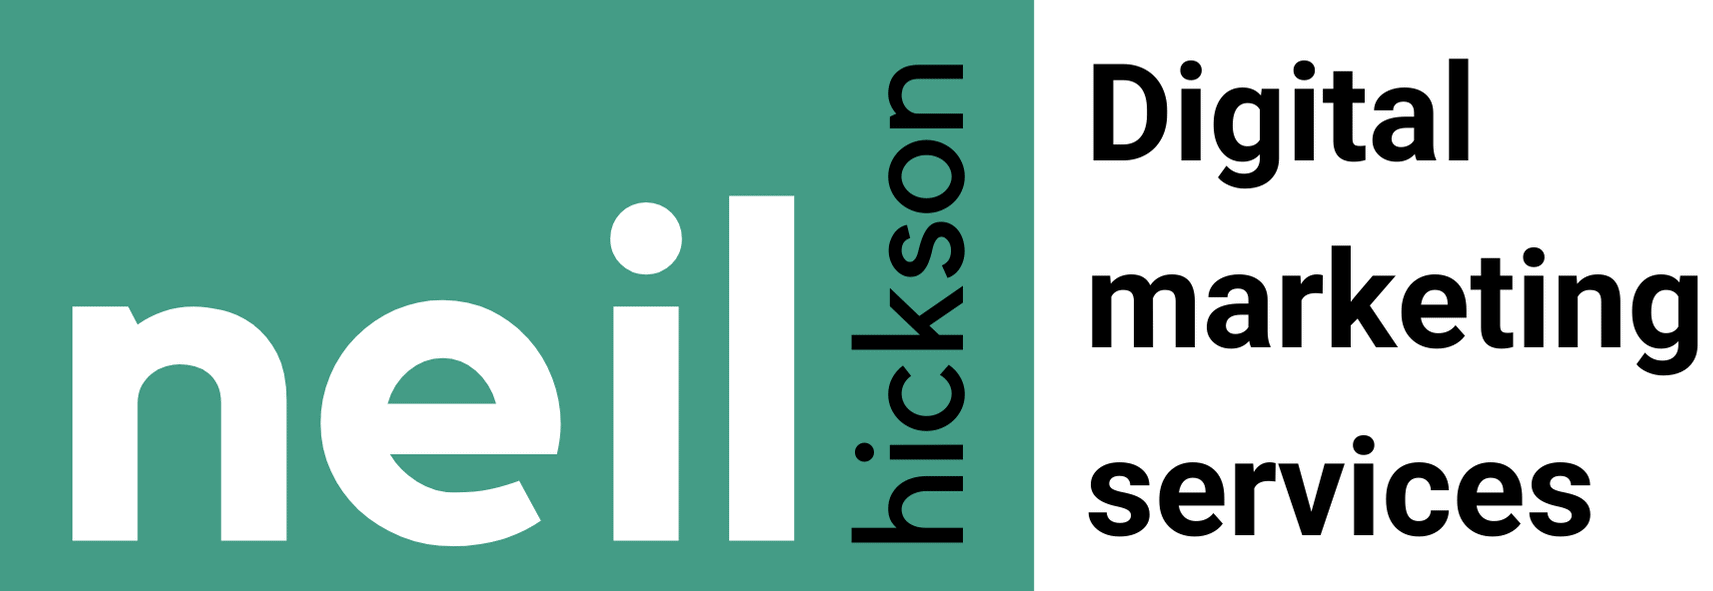 Neil Hickson Digital Marketing Services Logo Image